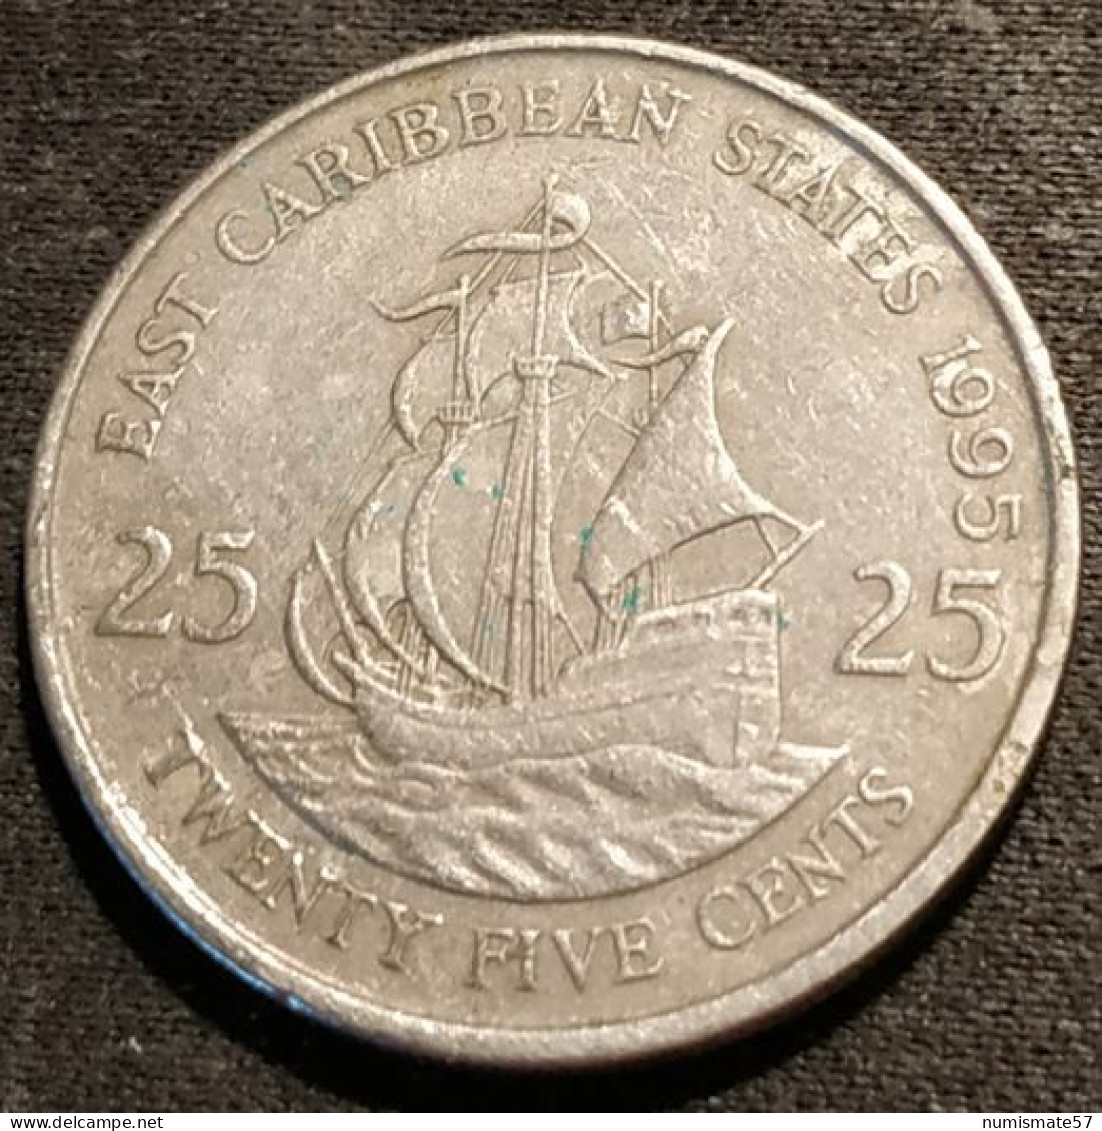 EAST CARIBBEAN STATES - 25 CENTS 1995 - Elizabeth II - 2e Effigie - KM 14 - ( Caraibes ) - Ostkaribischer Staaten